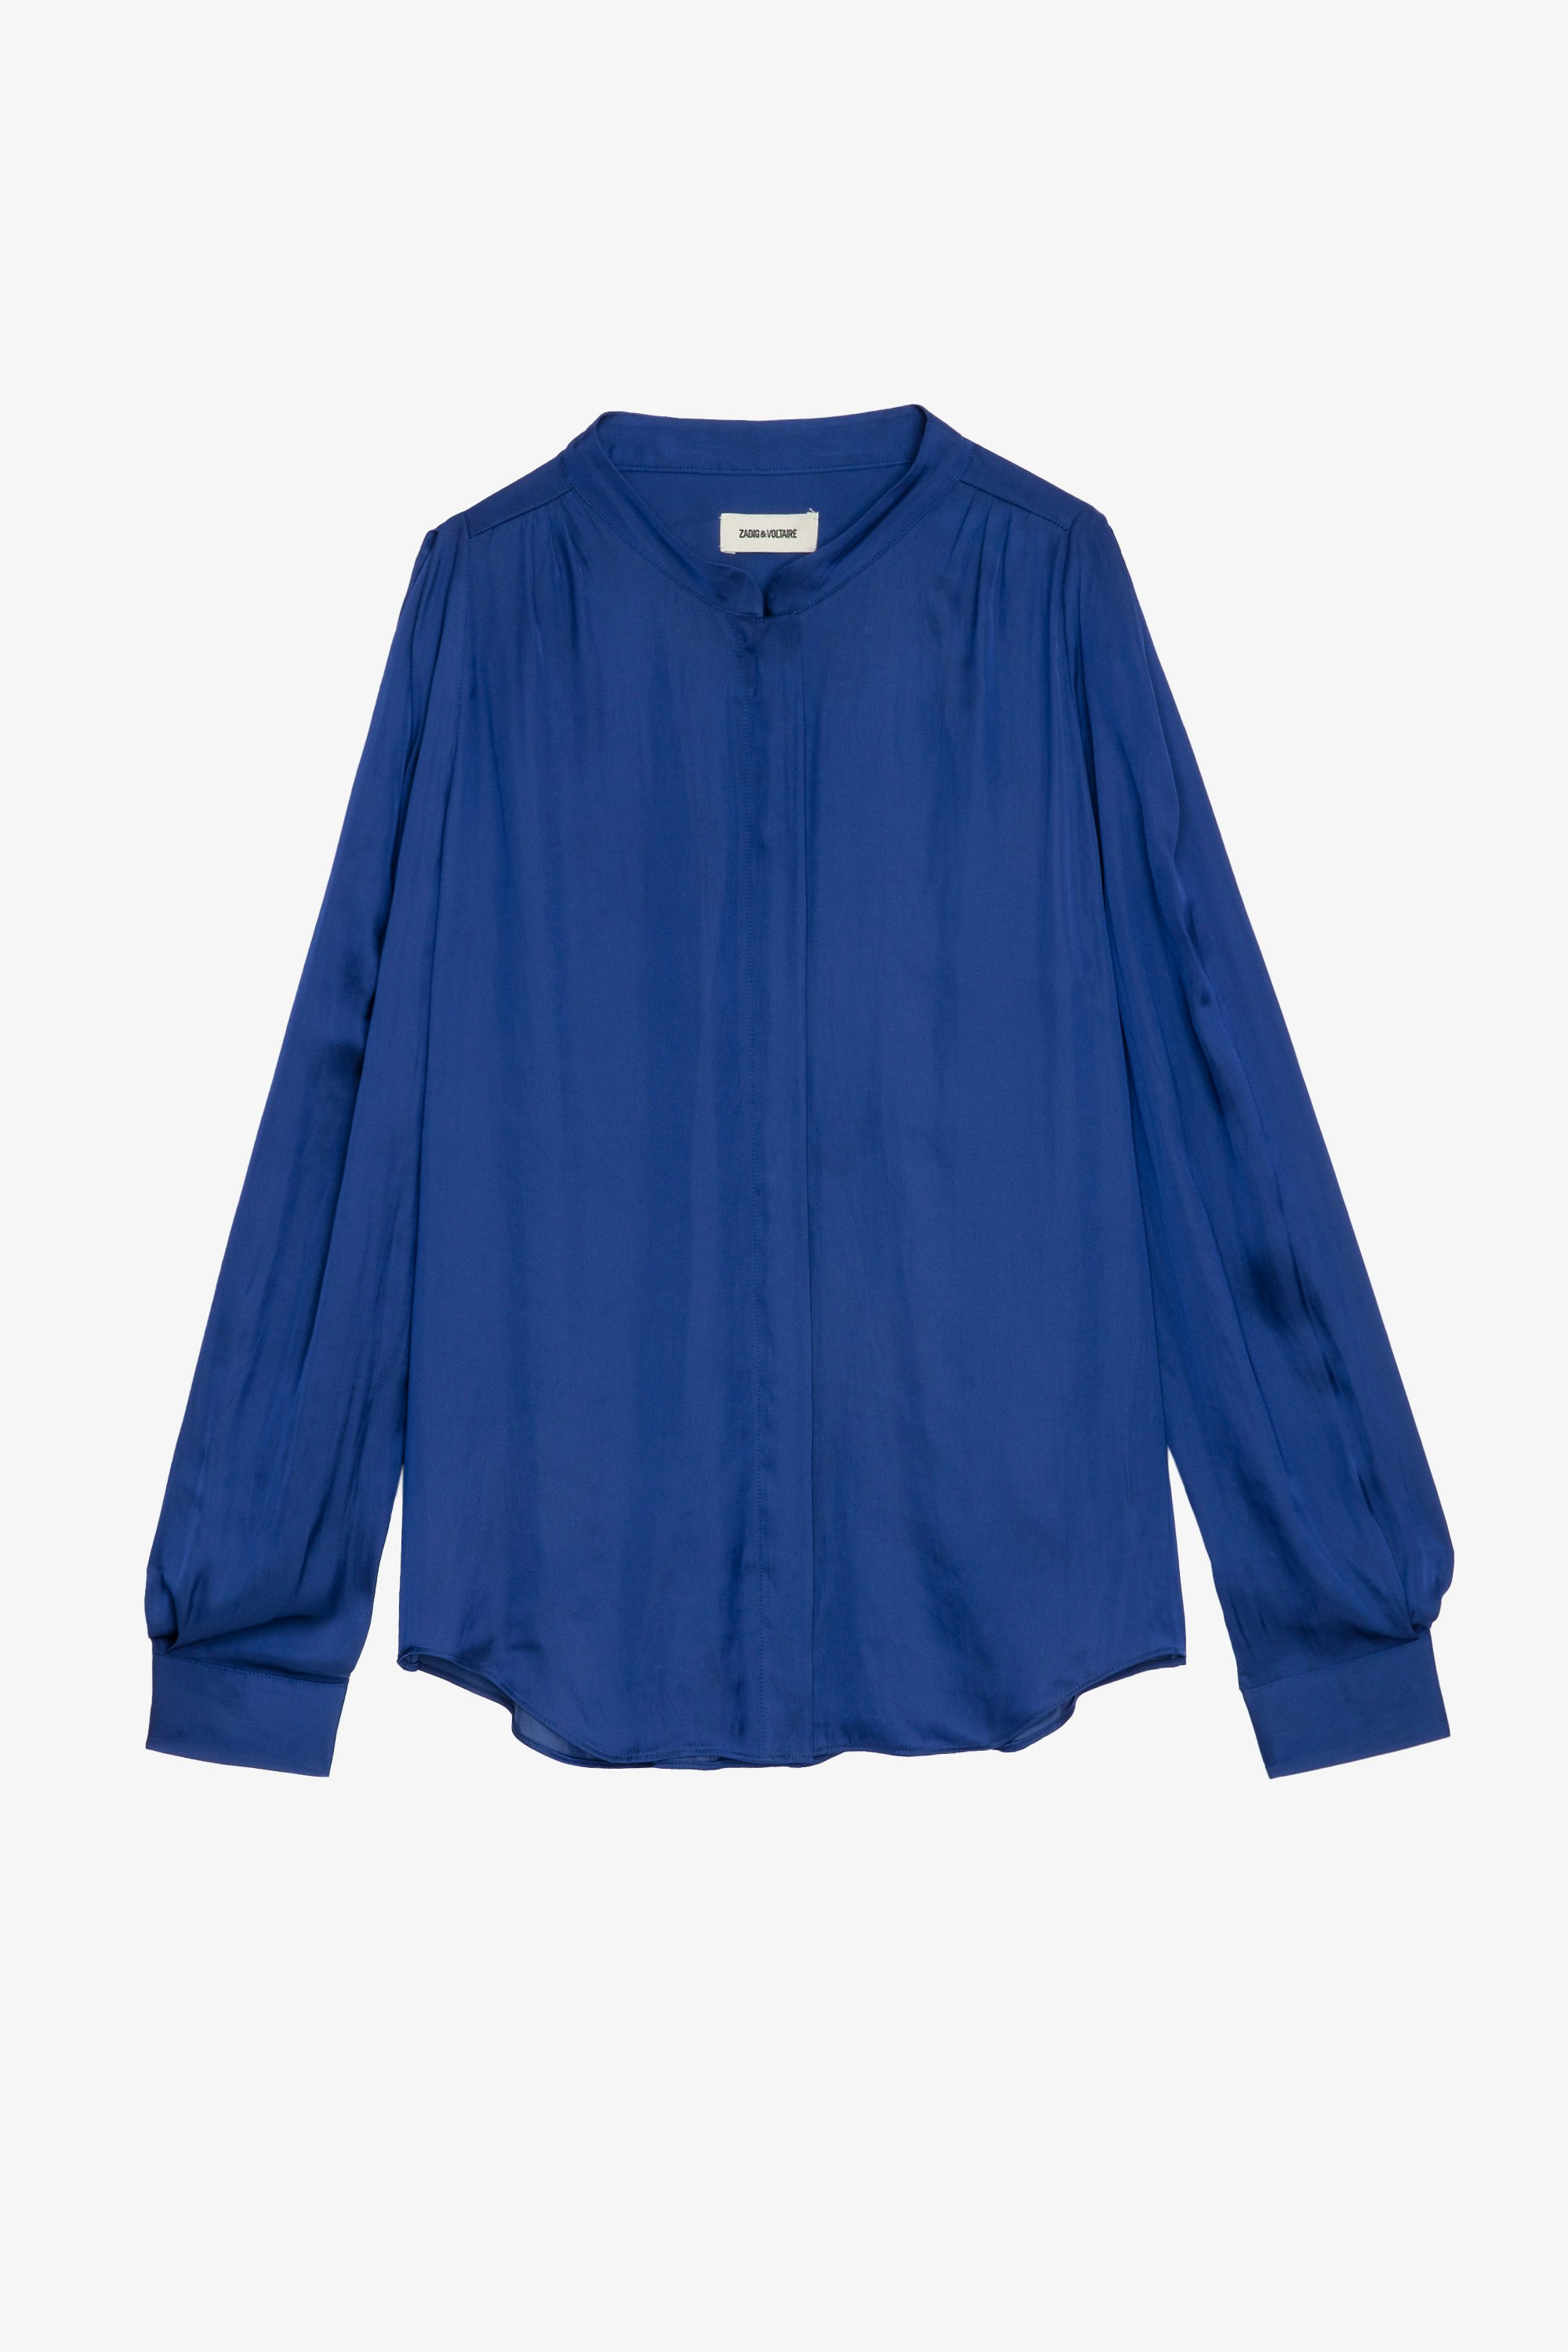 Touchy Satin Shirt Women's blue satiny shirt